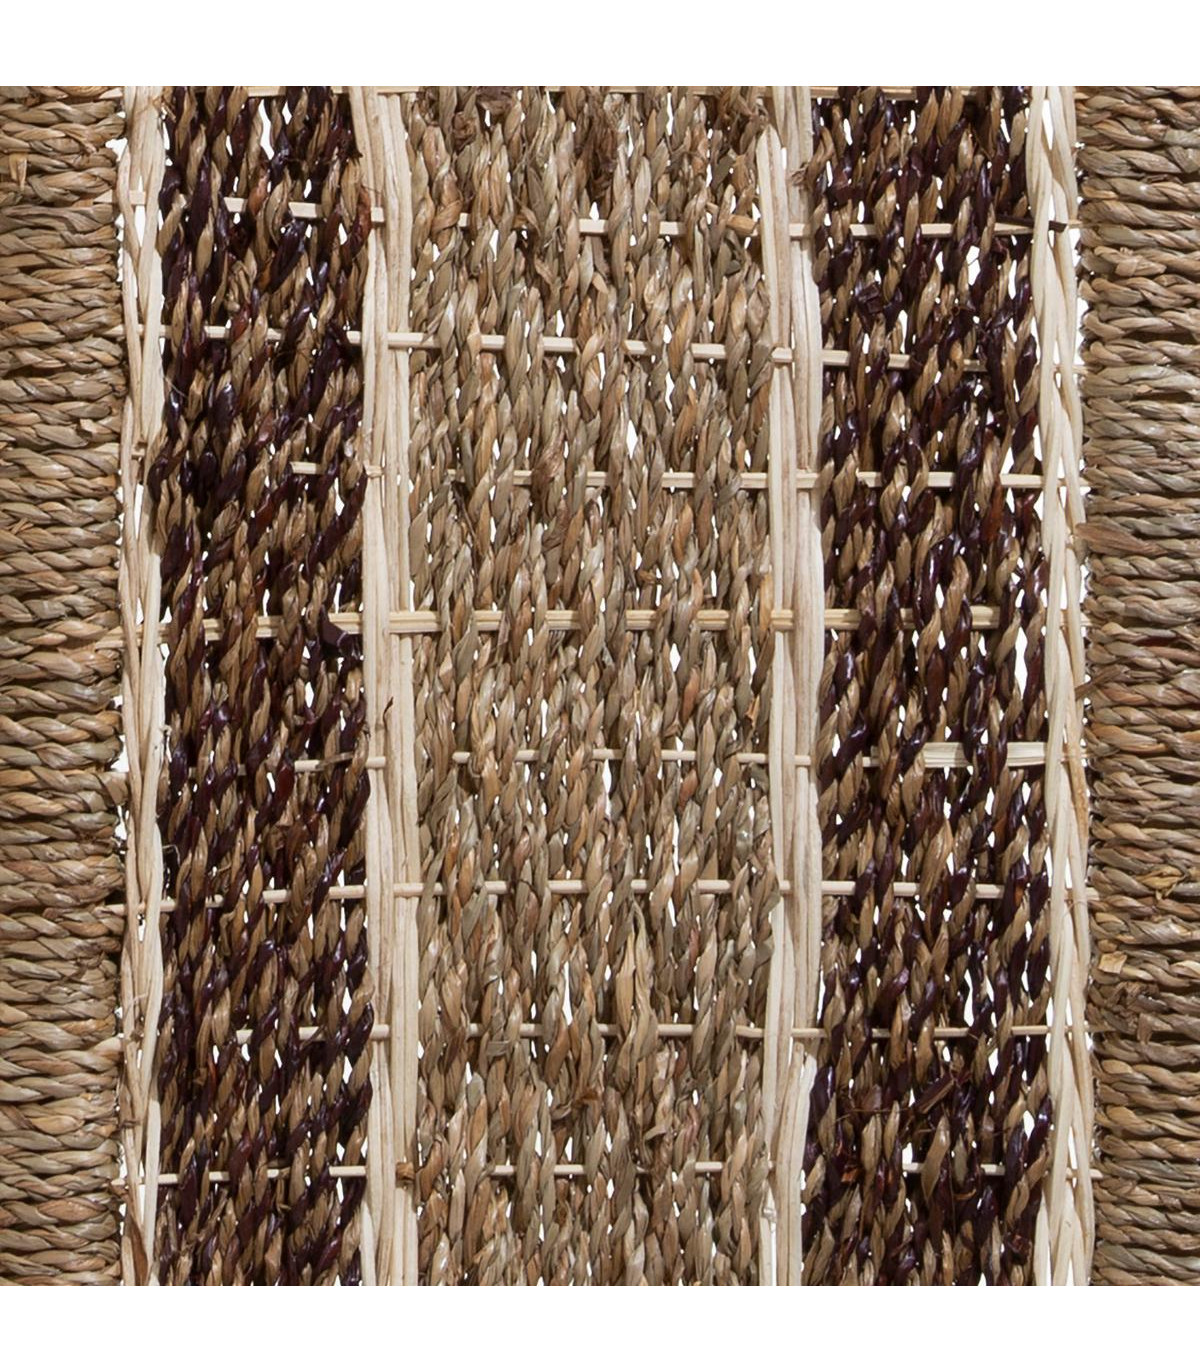 lot-de-5-paniers-seagrass-rectangulaires-beige-et-marron-dimensions-assorties (4)